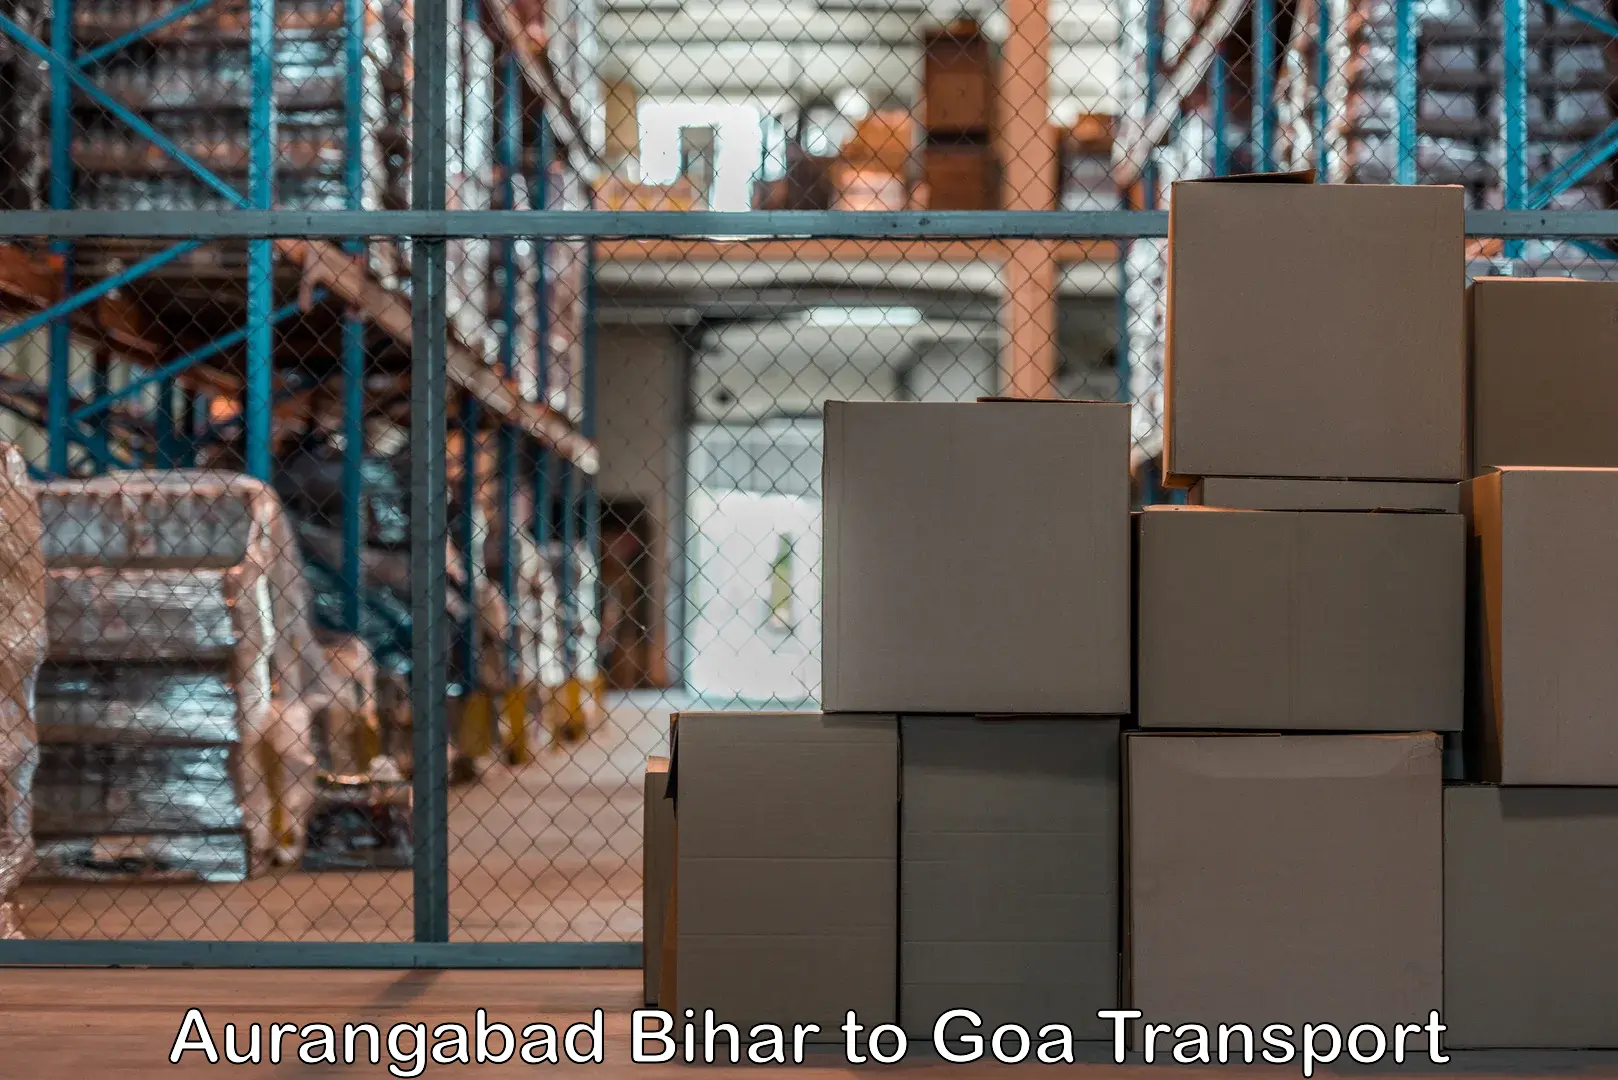 Truck transport companies in India Aurangabad Bihar to South Goa